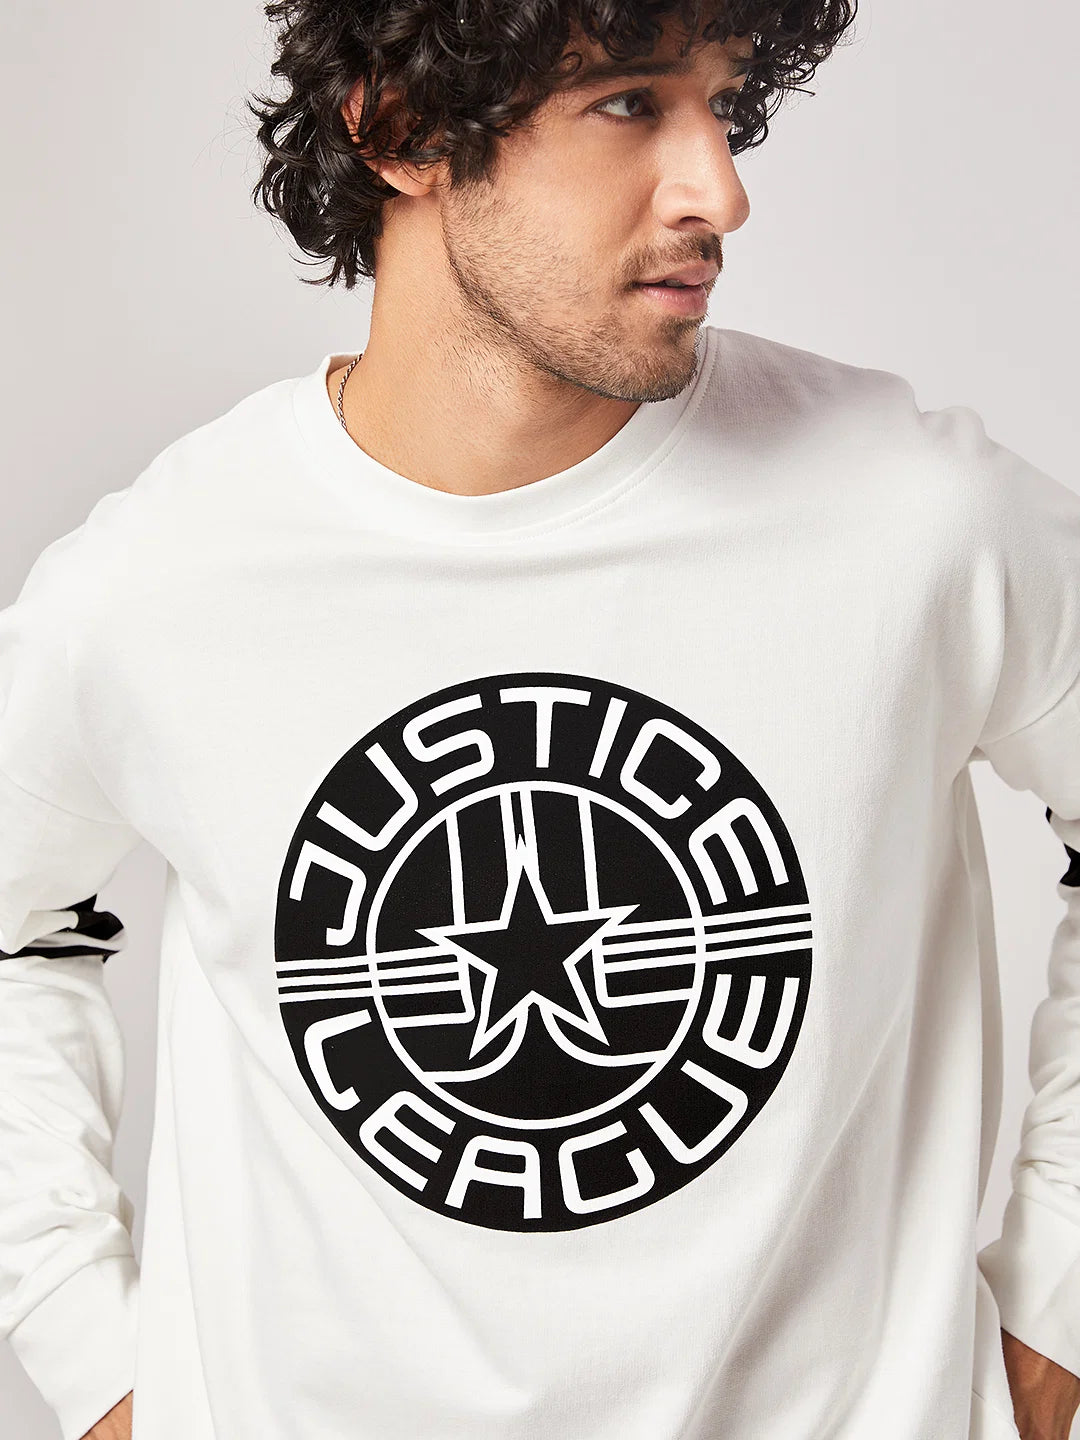 Logo classique de la Justice League (version britannique)